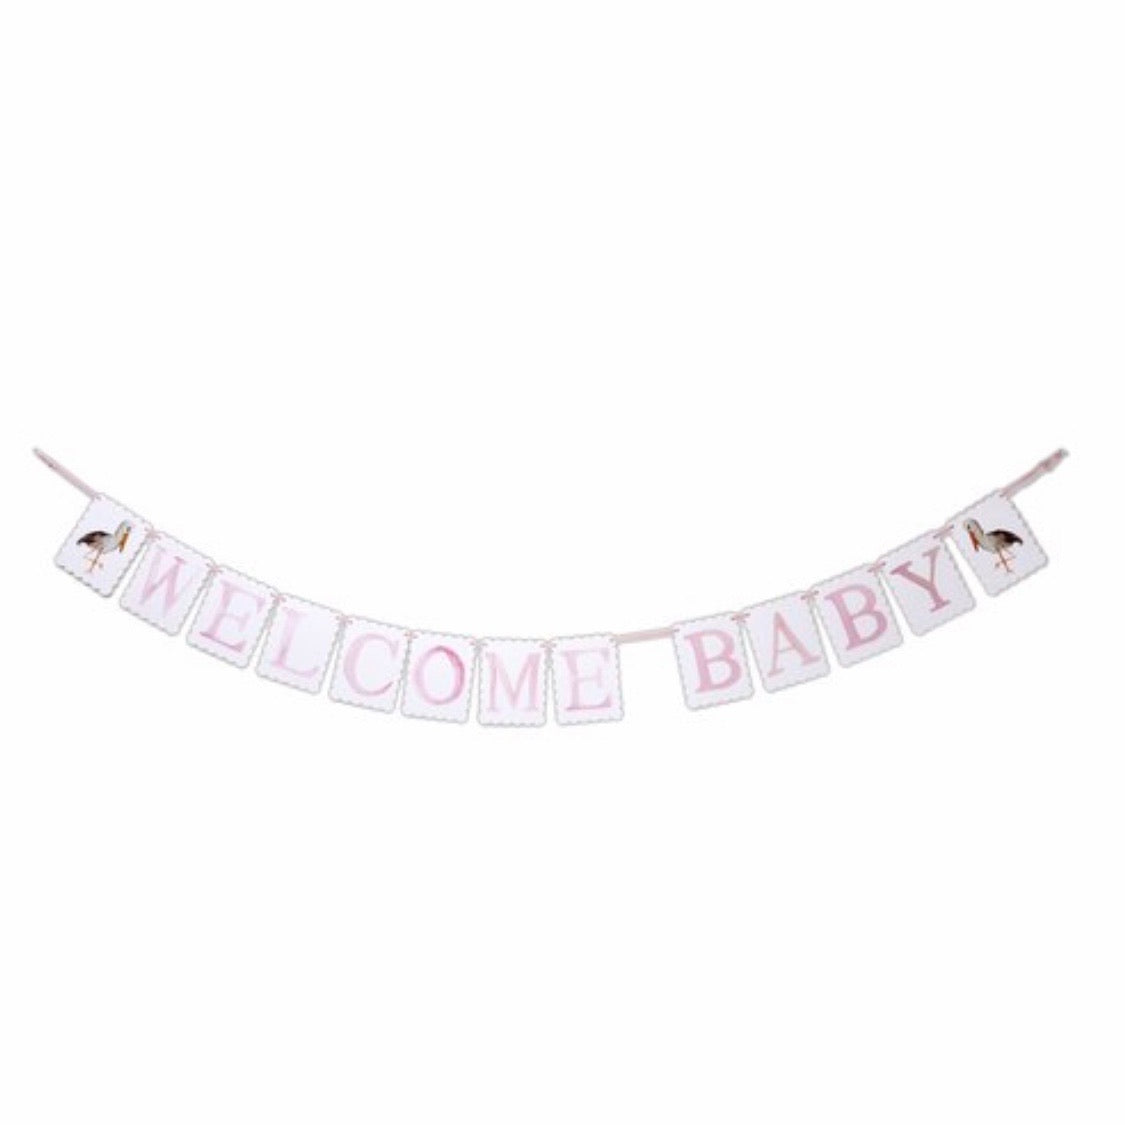 Welcome Baby Girl Stork Banner